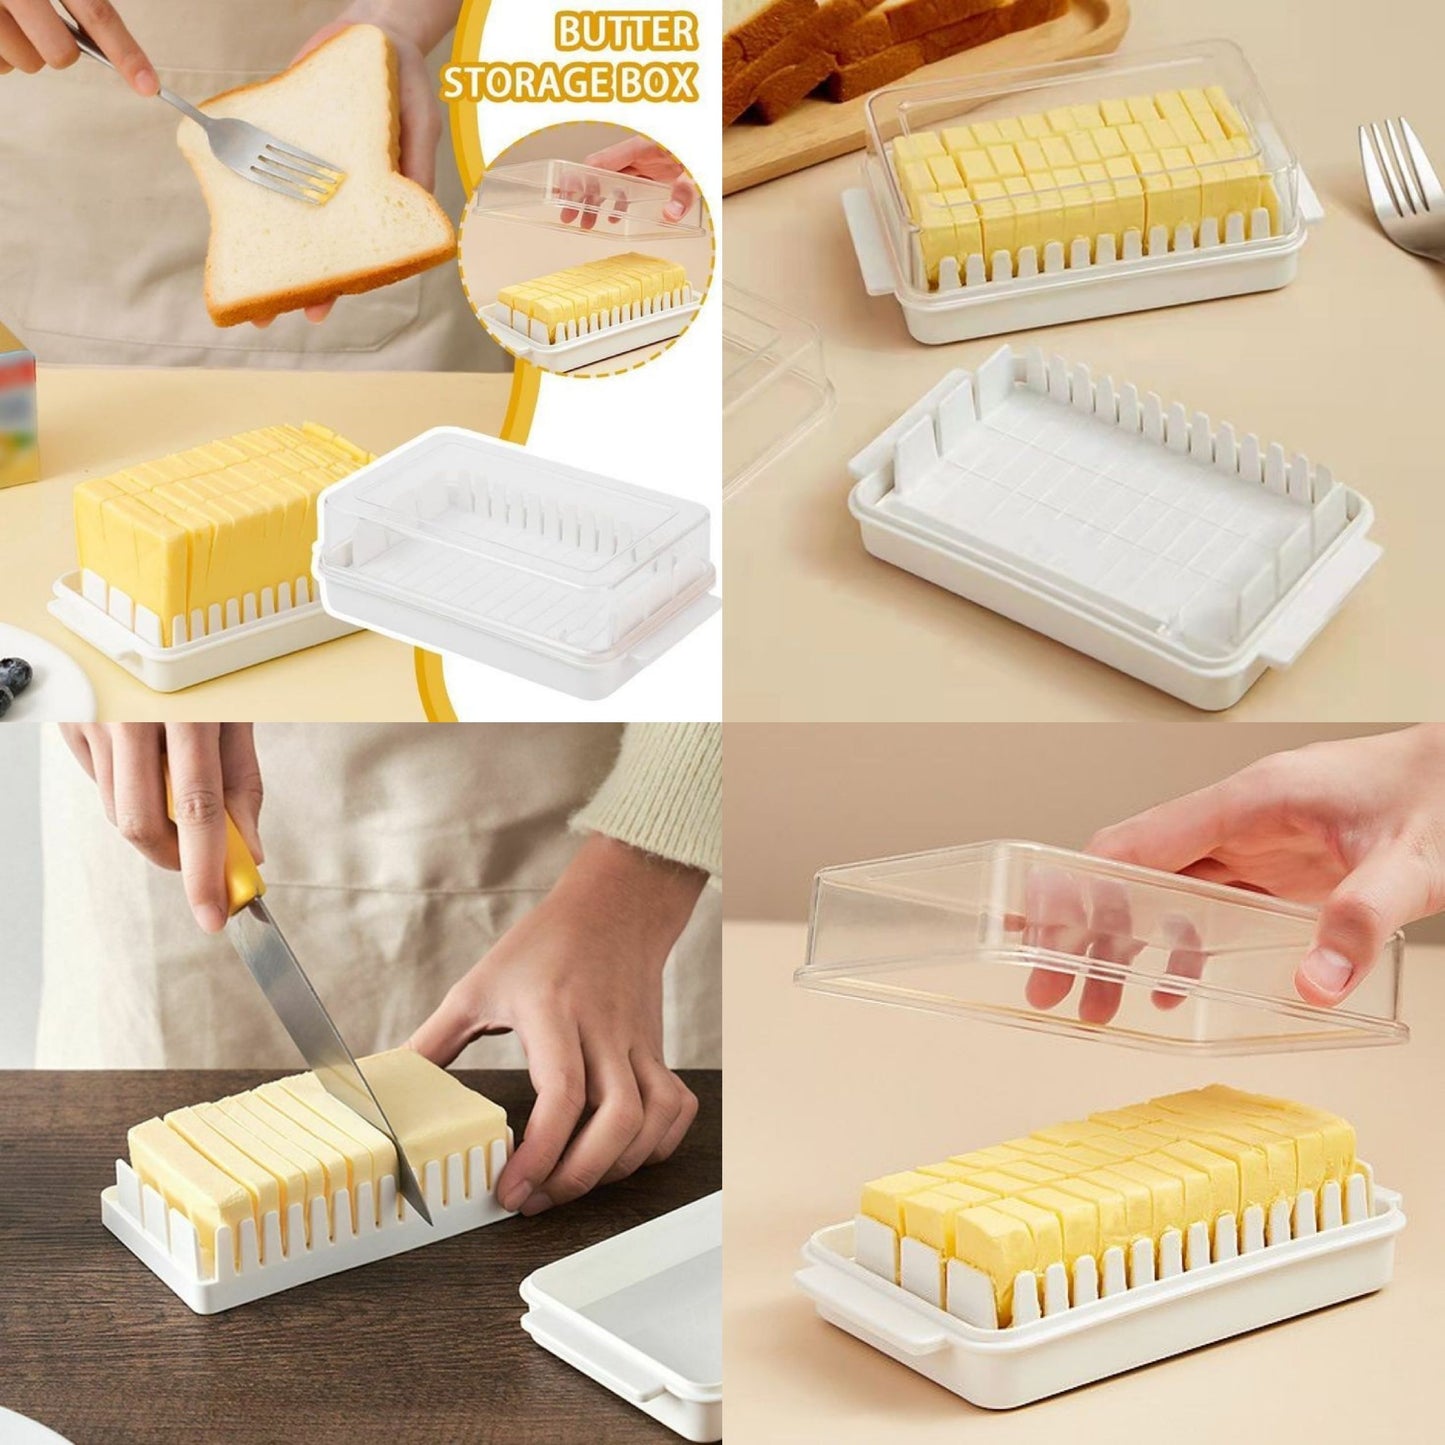 Butter Storage & Cutting Box